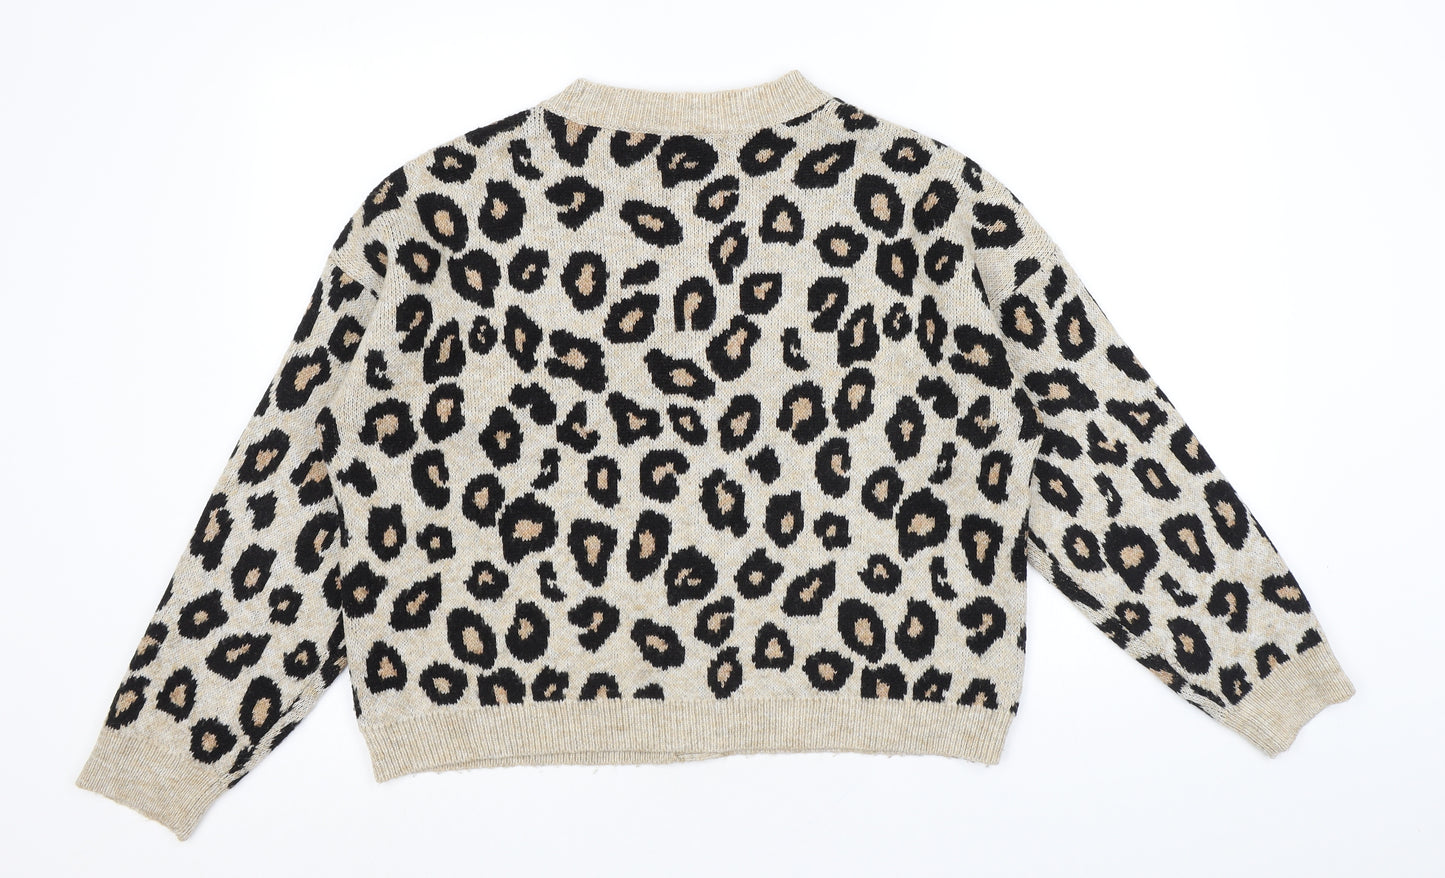 New Look Womens Brown V-Neck Animal Print Acrylic Cardigan Jumper Size M - Leopard pattern